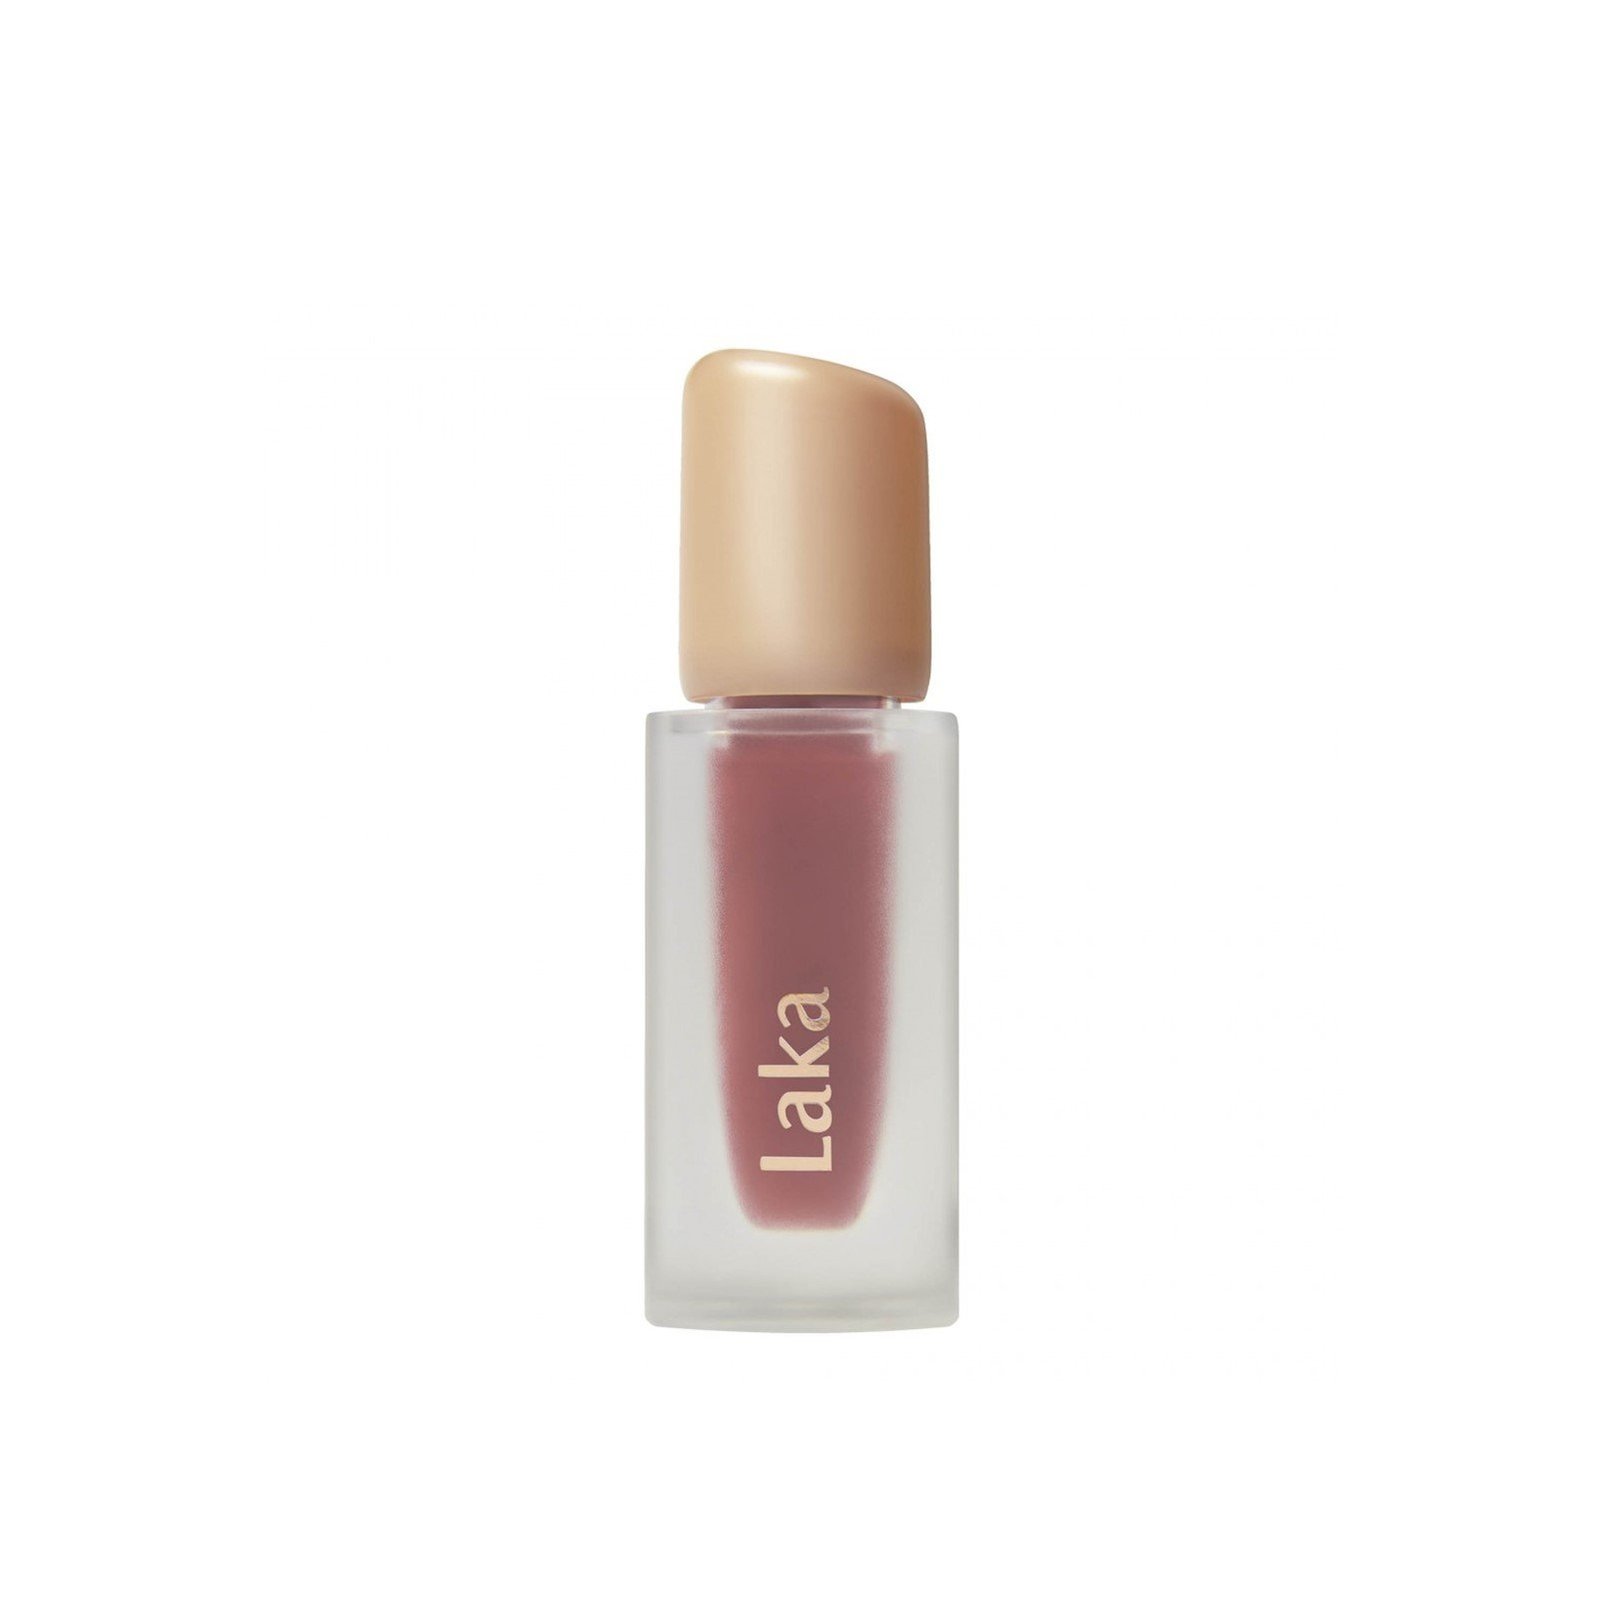 Laka Fruity Glam Lip Tint 103 Humming 4.5g (0.15 oz)